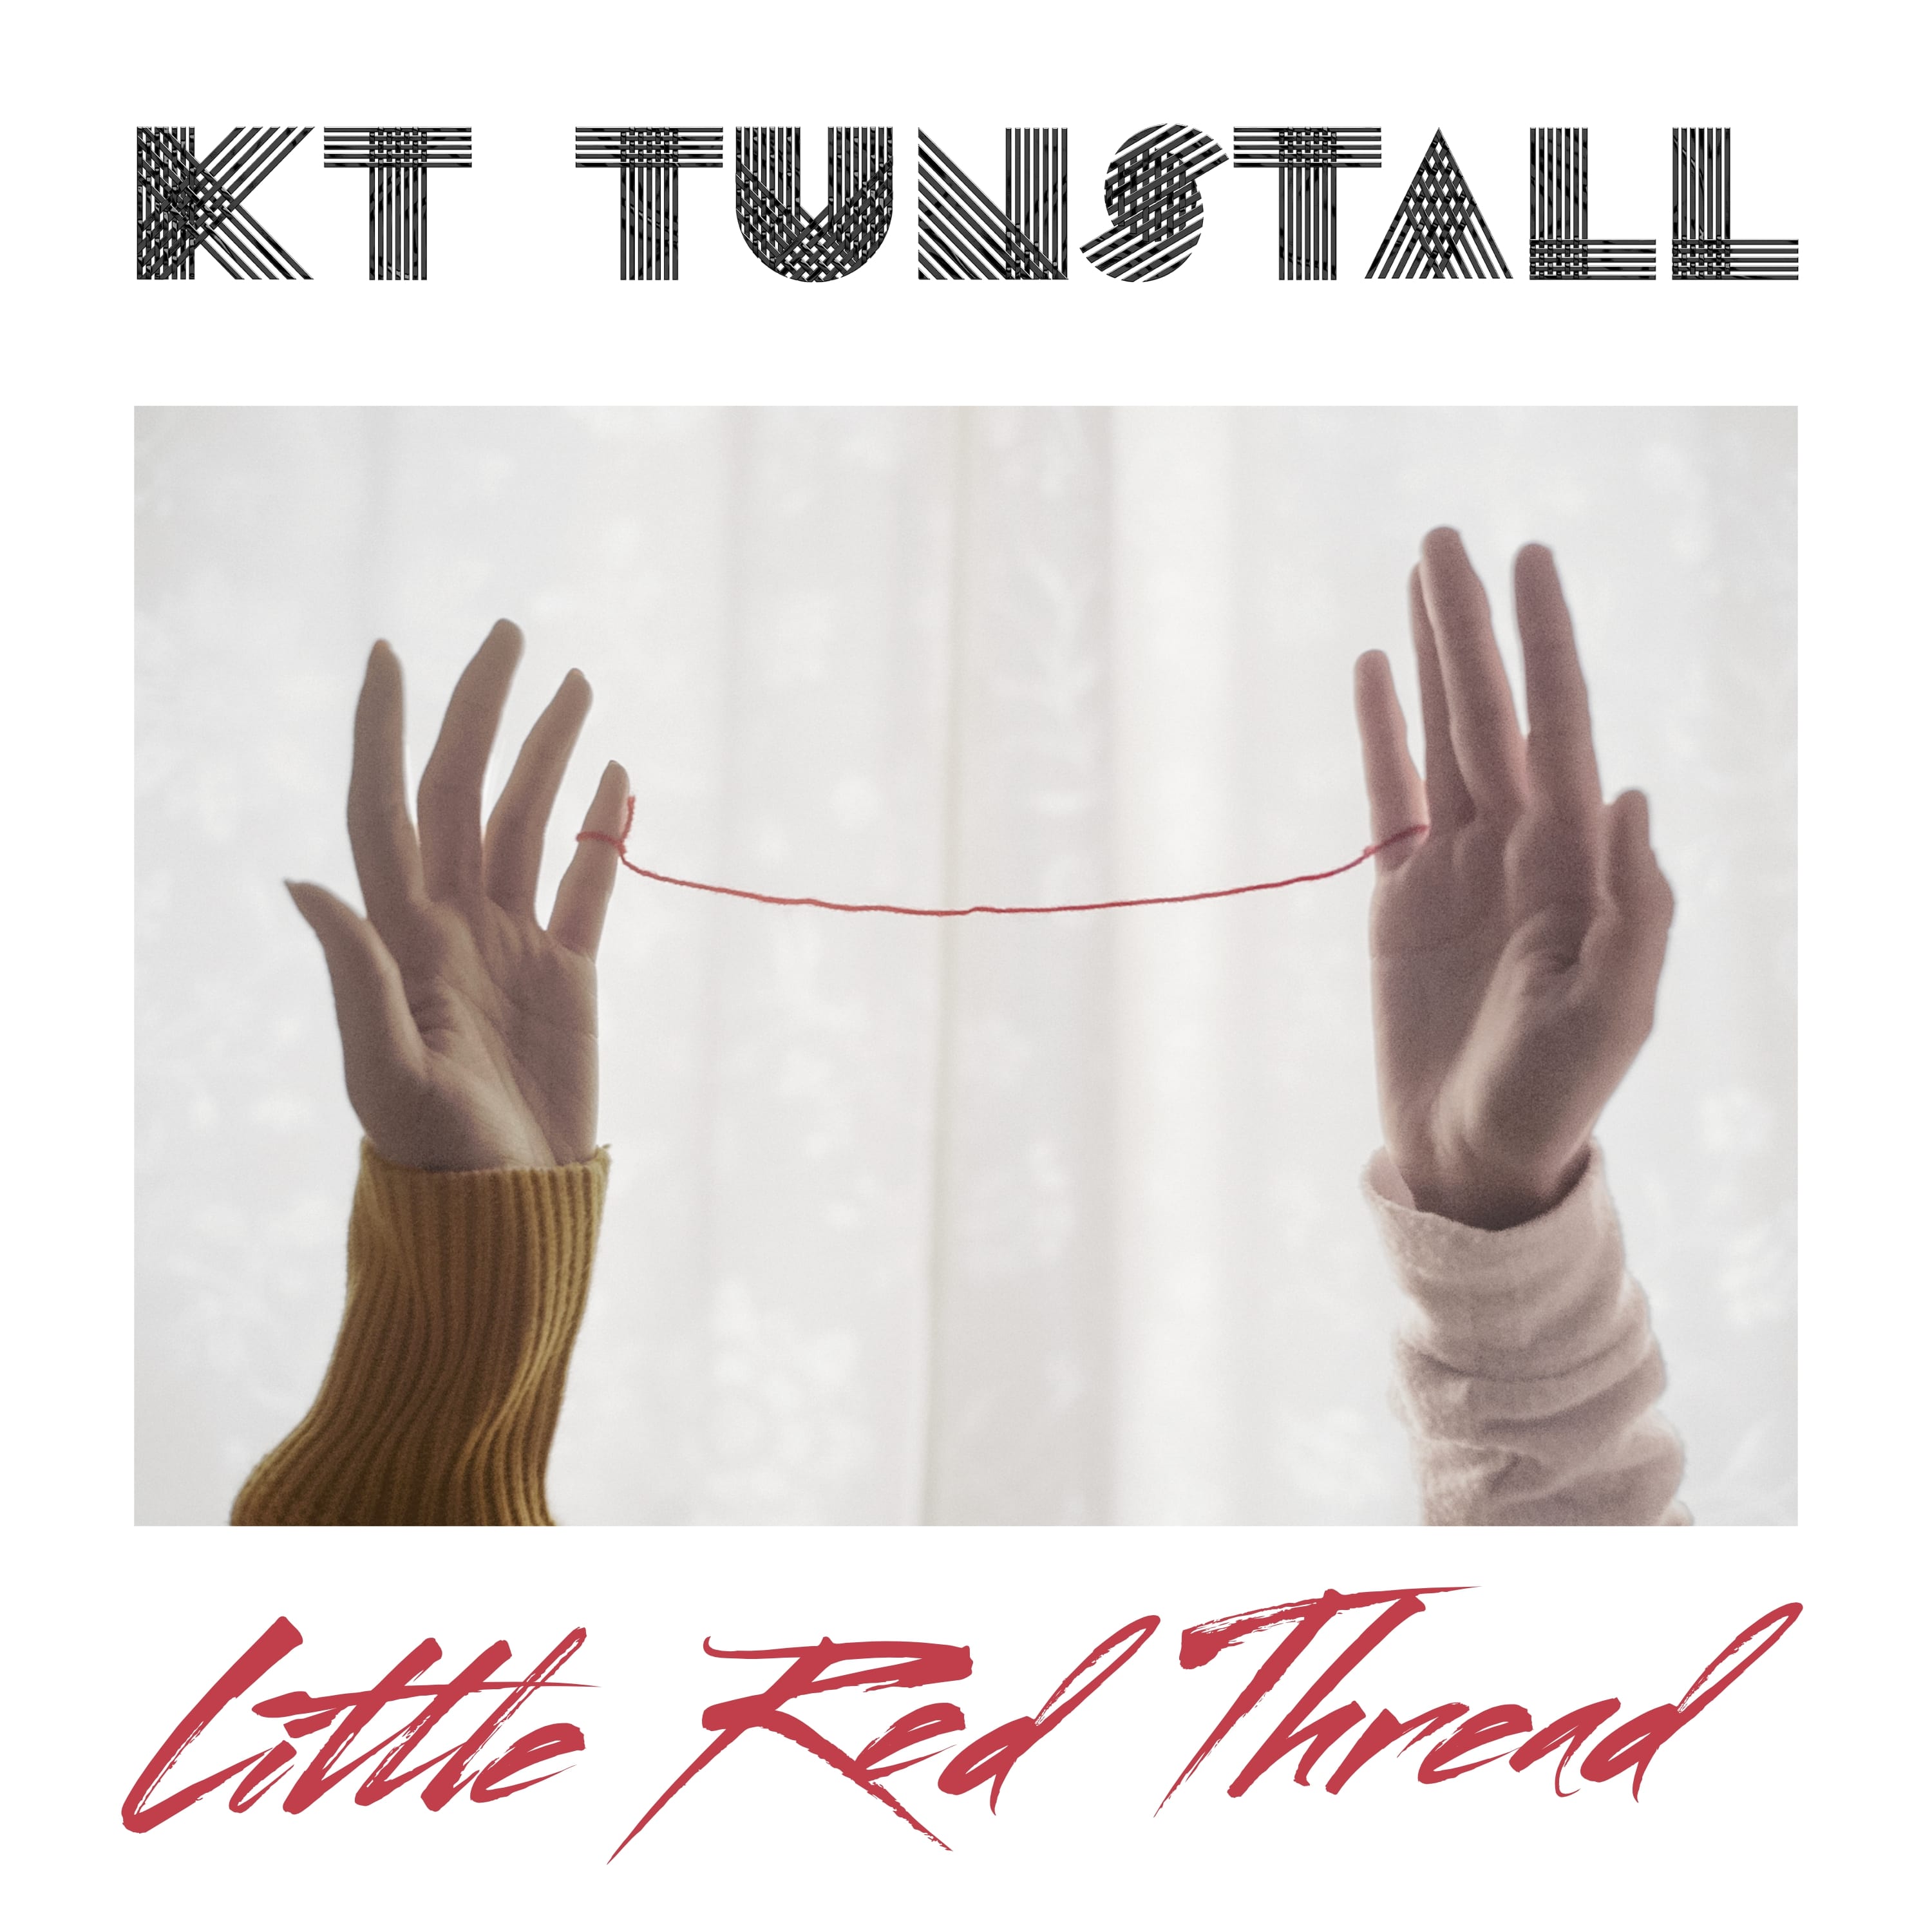 KT Tunstall — Little Red Thread cover artwork